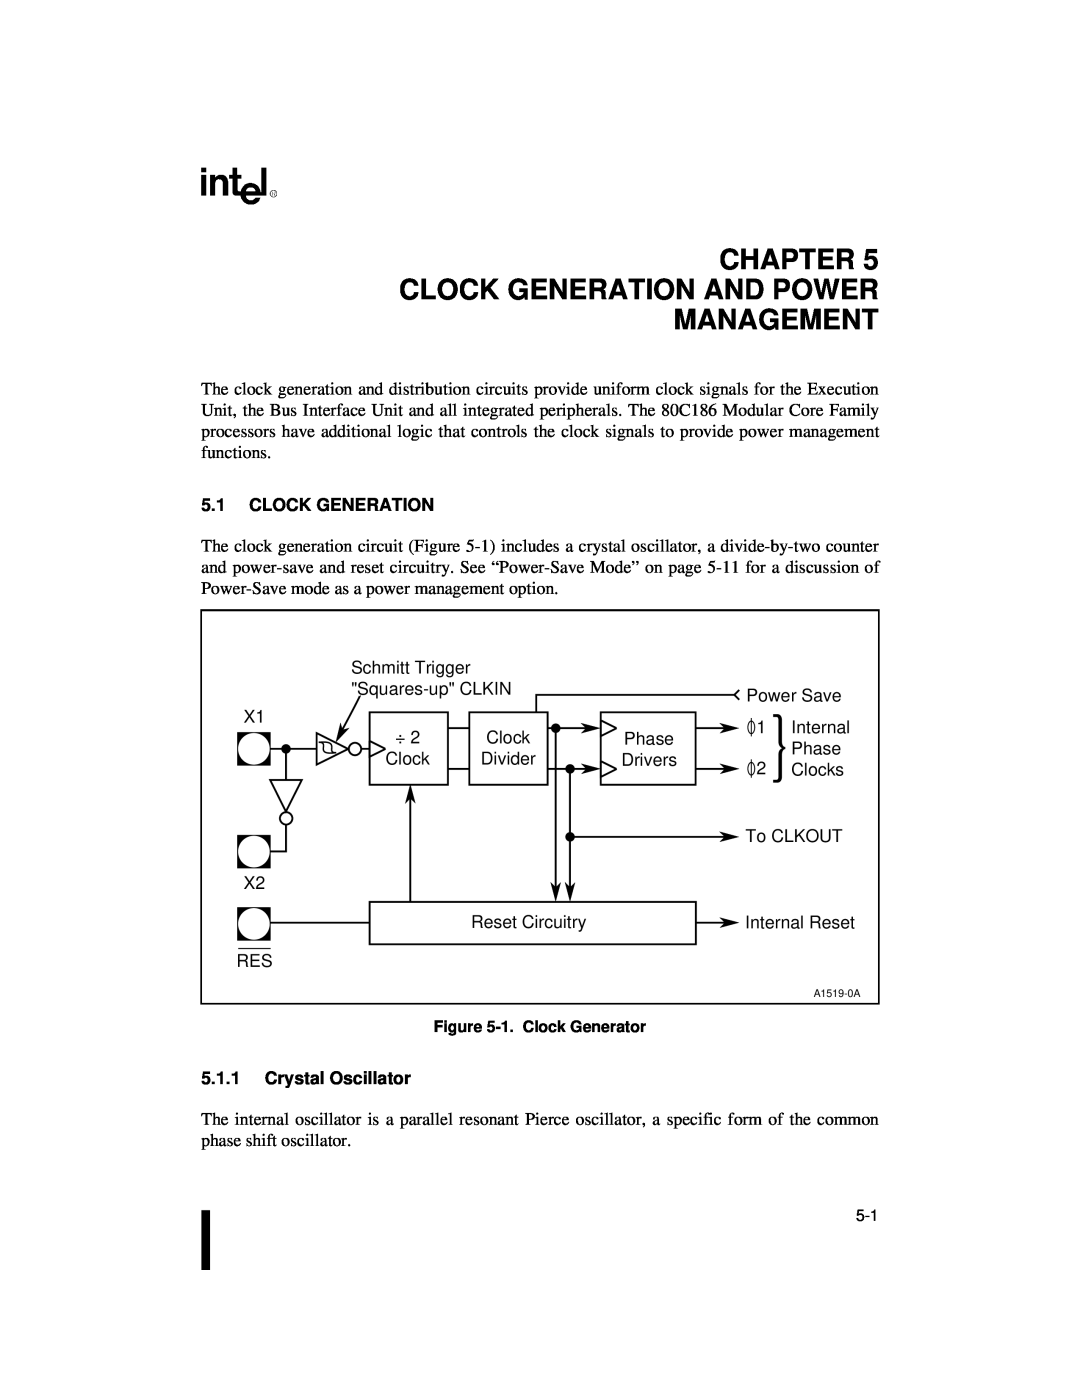 Intel 80C188XL, 80C186XL Chapter Clock Generation And Power Management, 5.1CLOCK GENERATION, 5.1.1Crystal Oscillator 